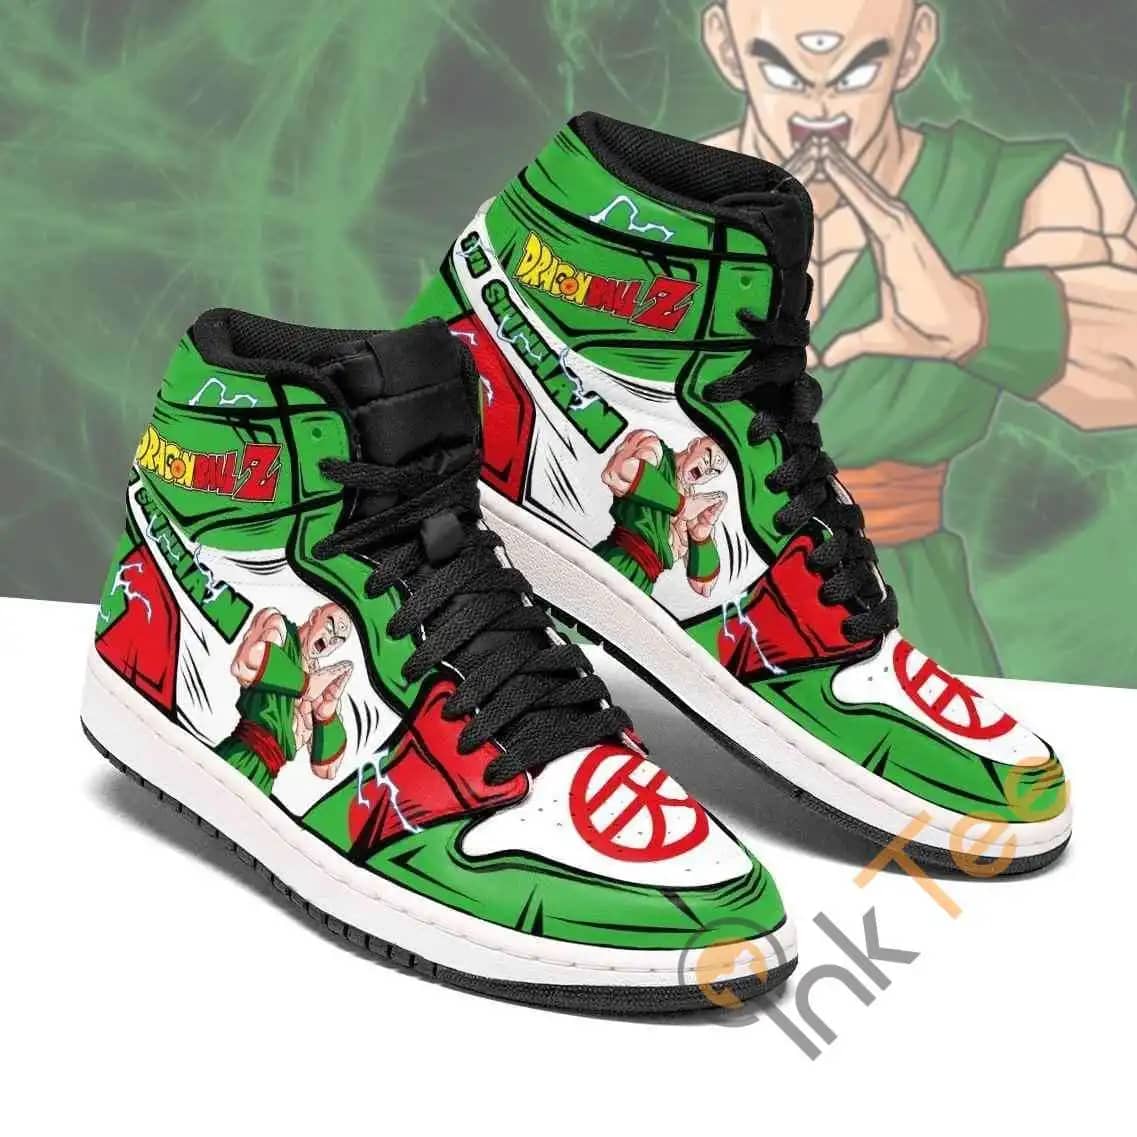 Tien Shinhan Dragon Ball Z Anime Sneakers Air Jordan Shoes